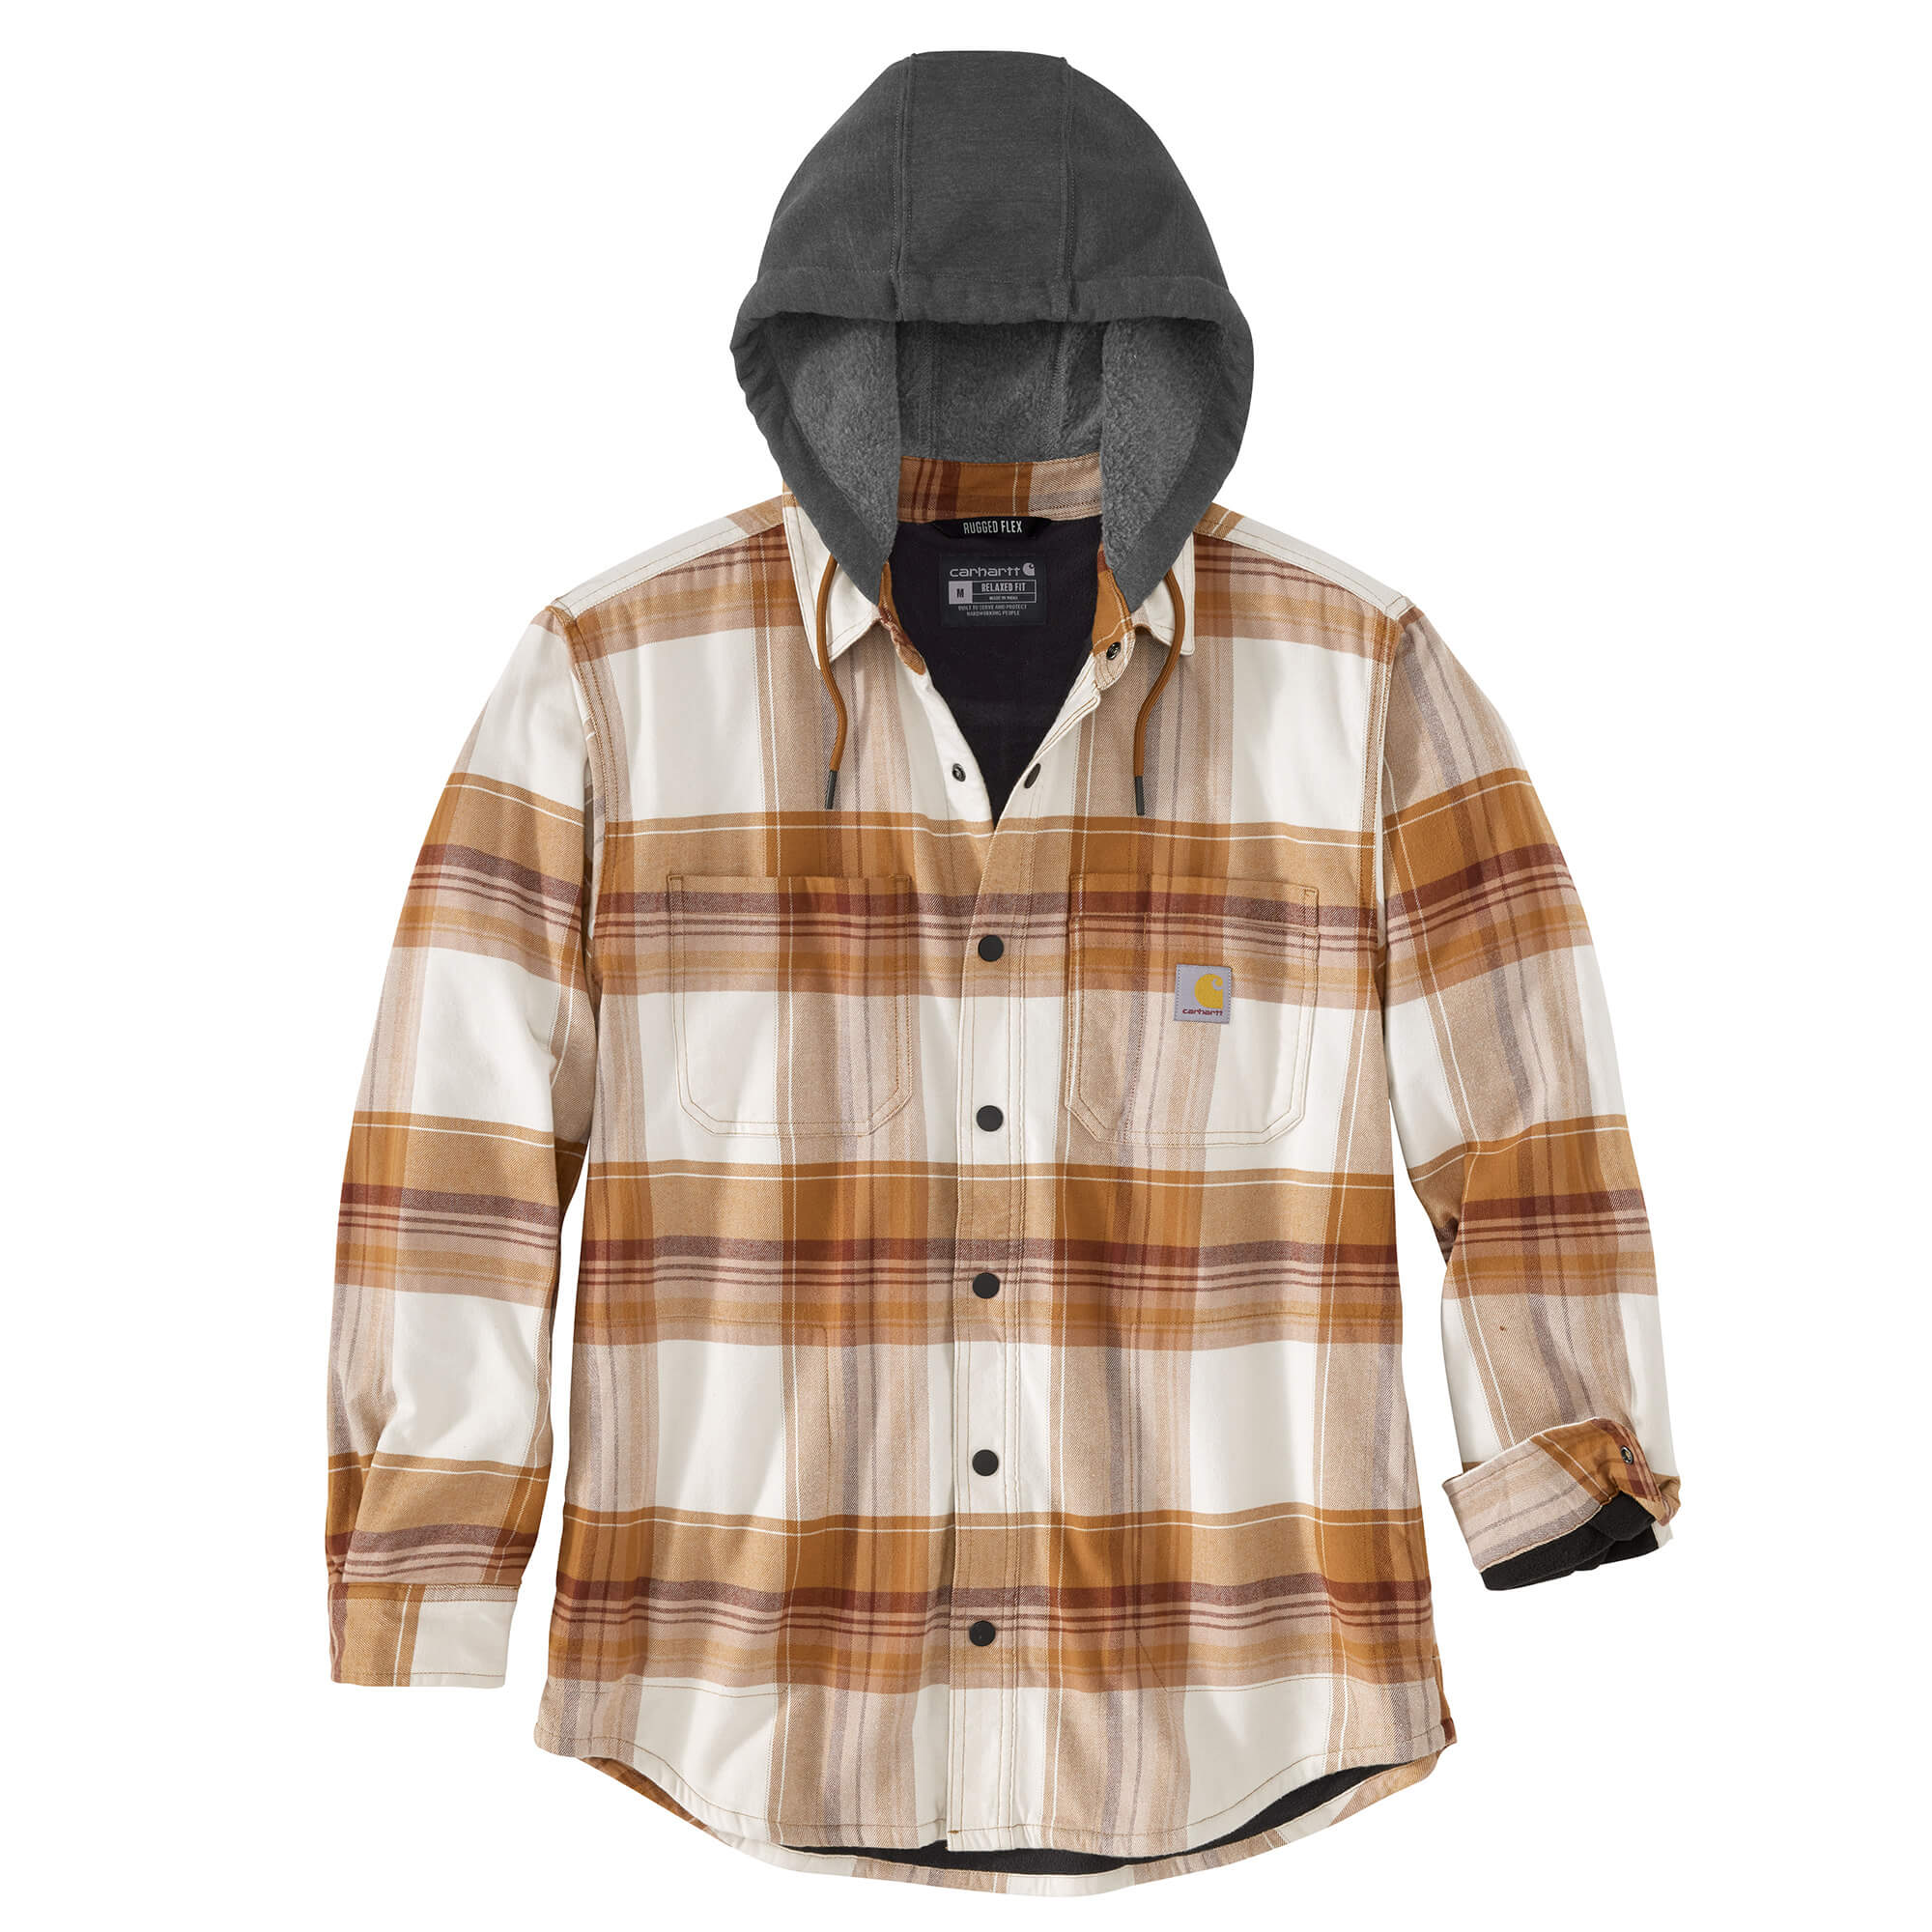 105938 - Carhartt Rugged Flex® Relaxed Fit Flannel Fleece Lined Hooded Shirt Jac